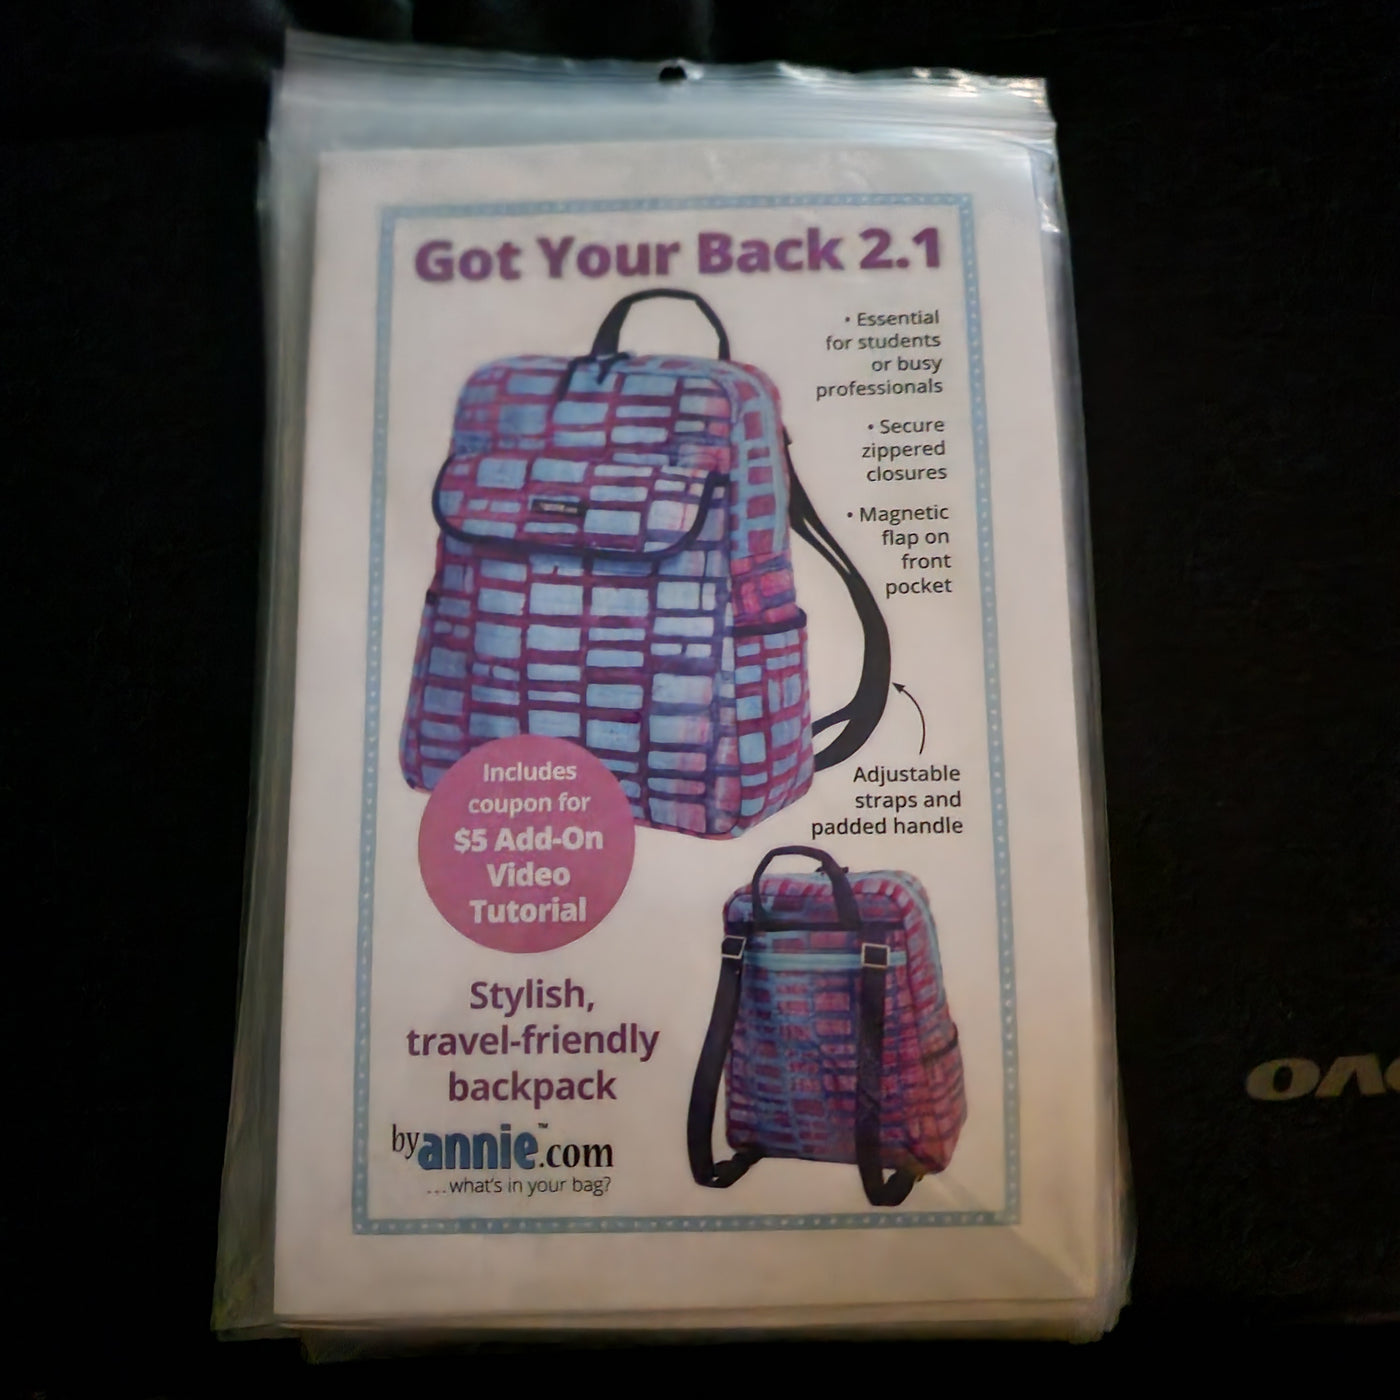 Got Your Back 2.1